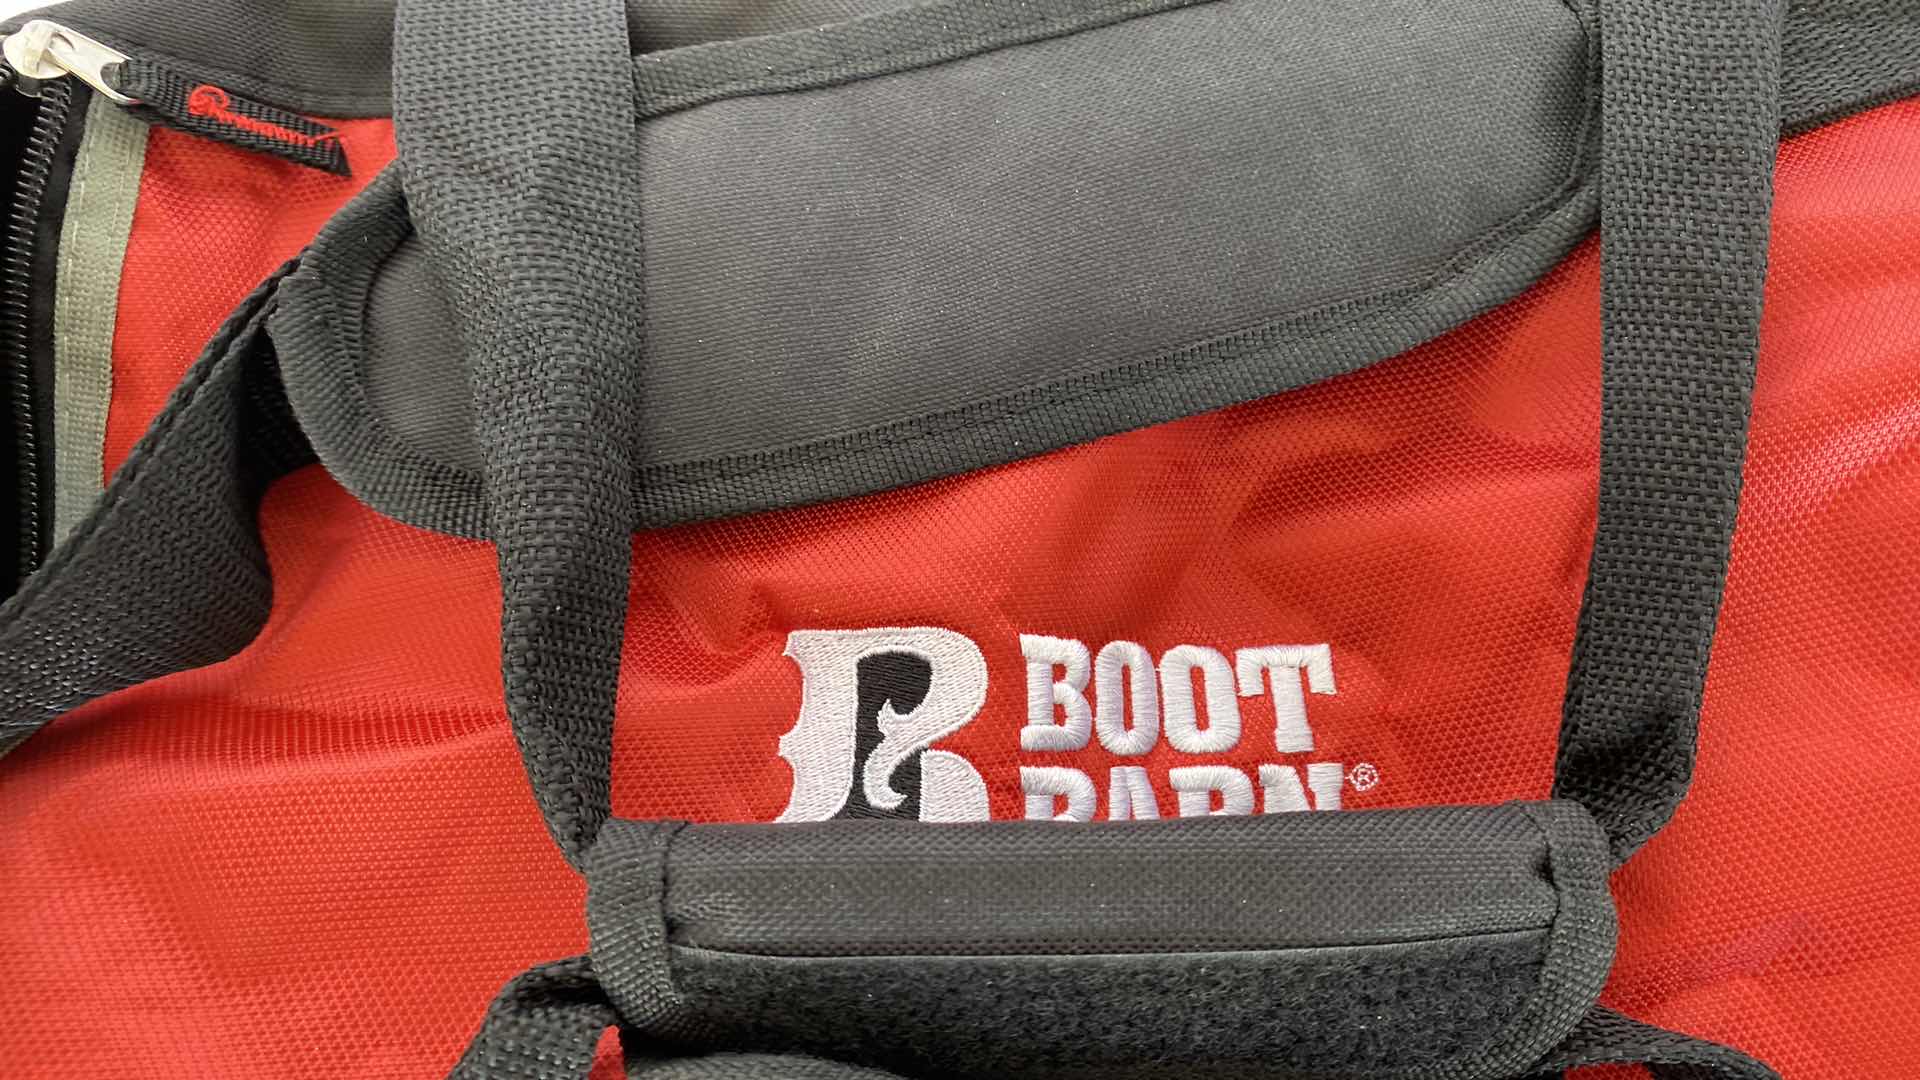 Photo 2 of BOOT BARN NFR 2015 BOOT BAG